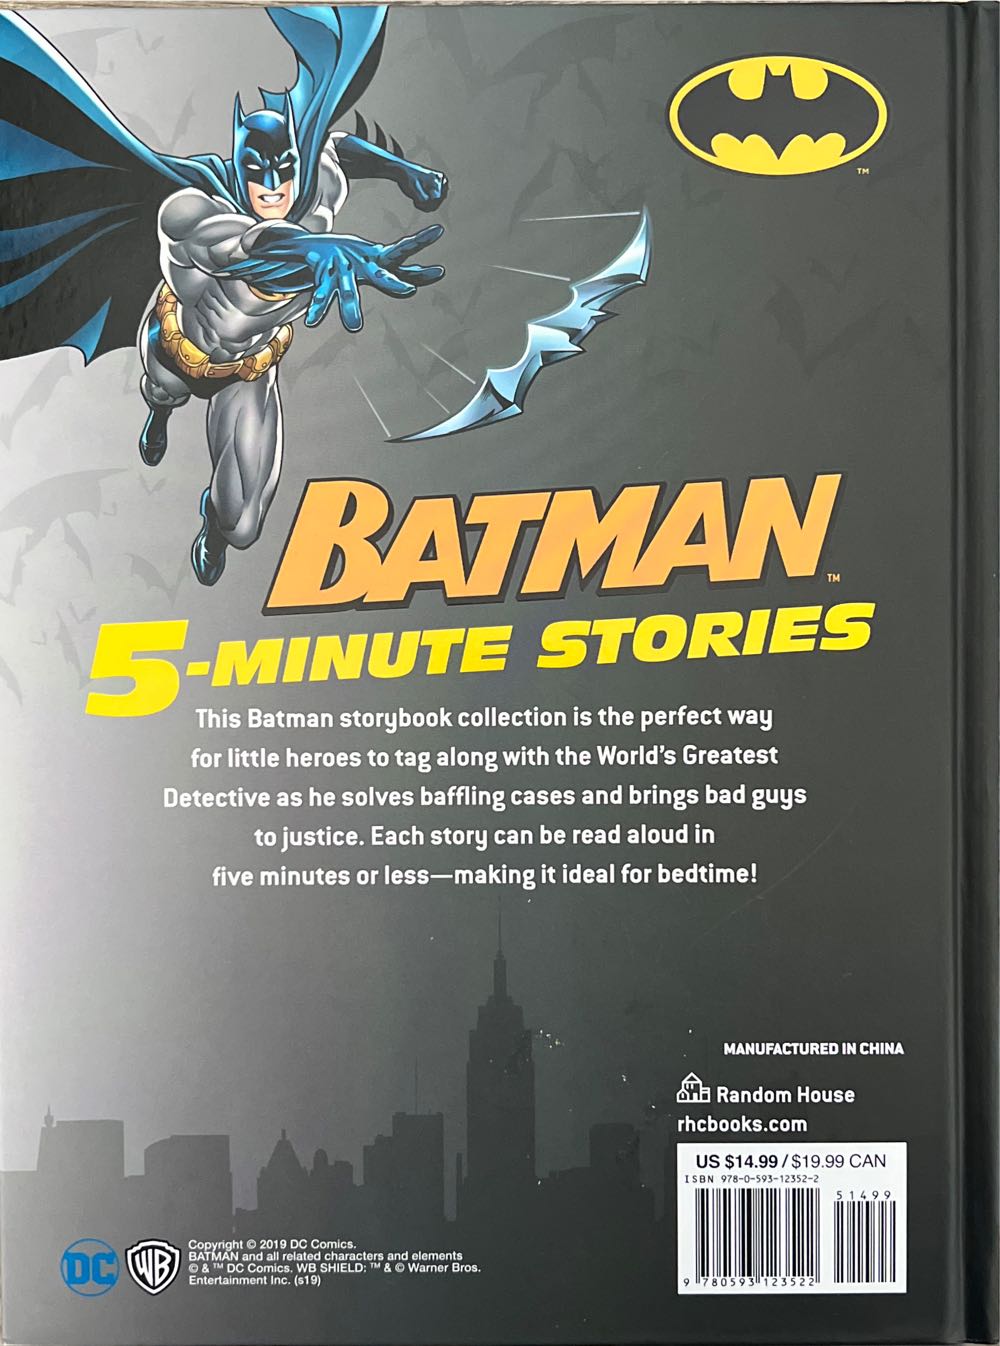 Batman 5-Minute Stories (DC Batman) - DC Comics (Random House Children’s Books - Hardcover) book collectible [Barcode 9780593123522] - Main Image 3